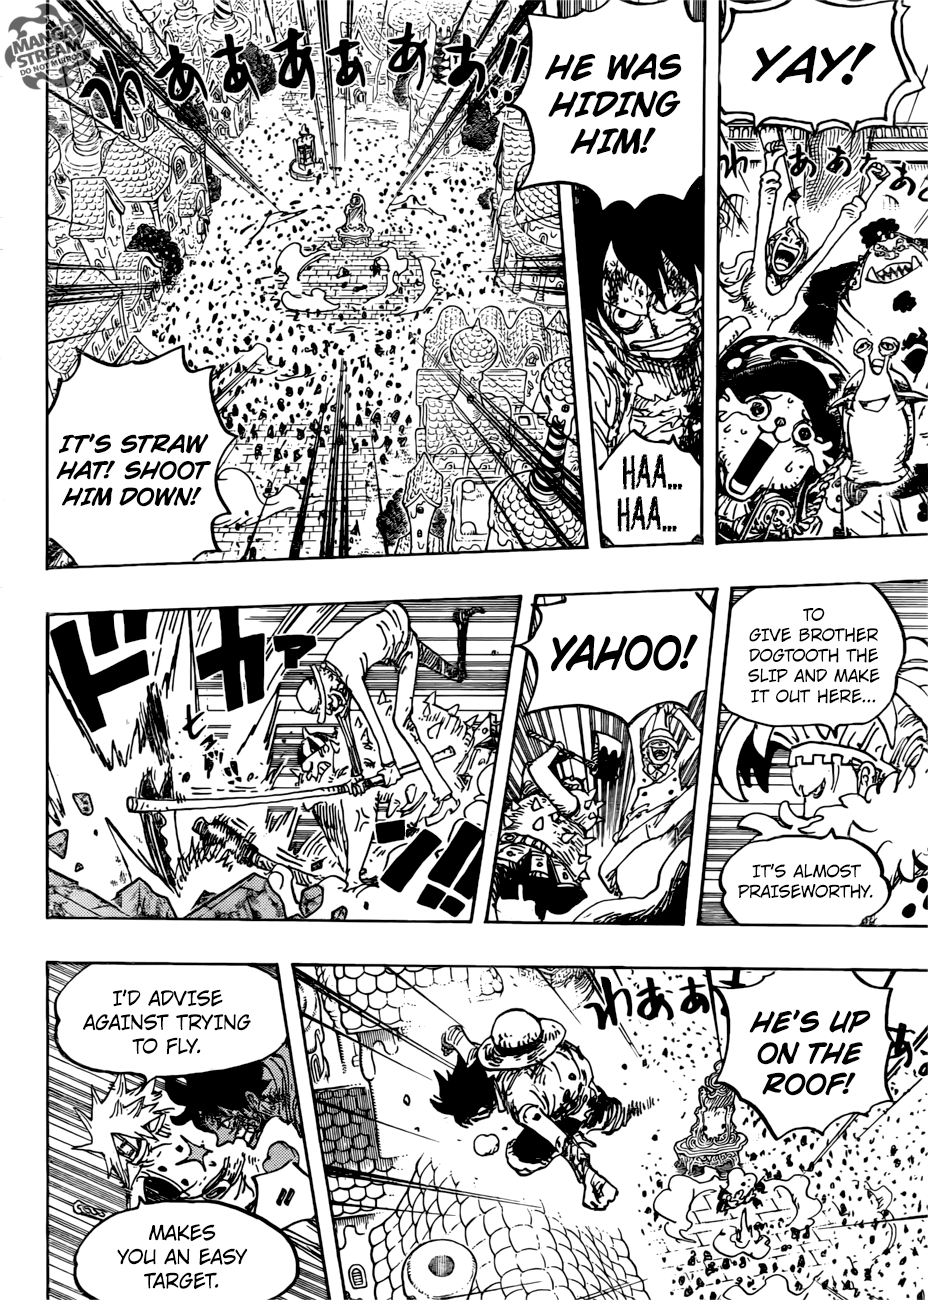 One Piece, Chapter 897 - Pekoms